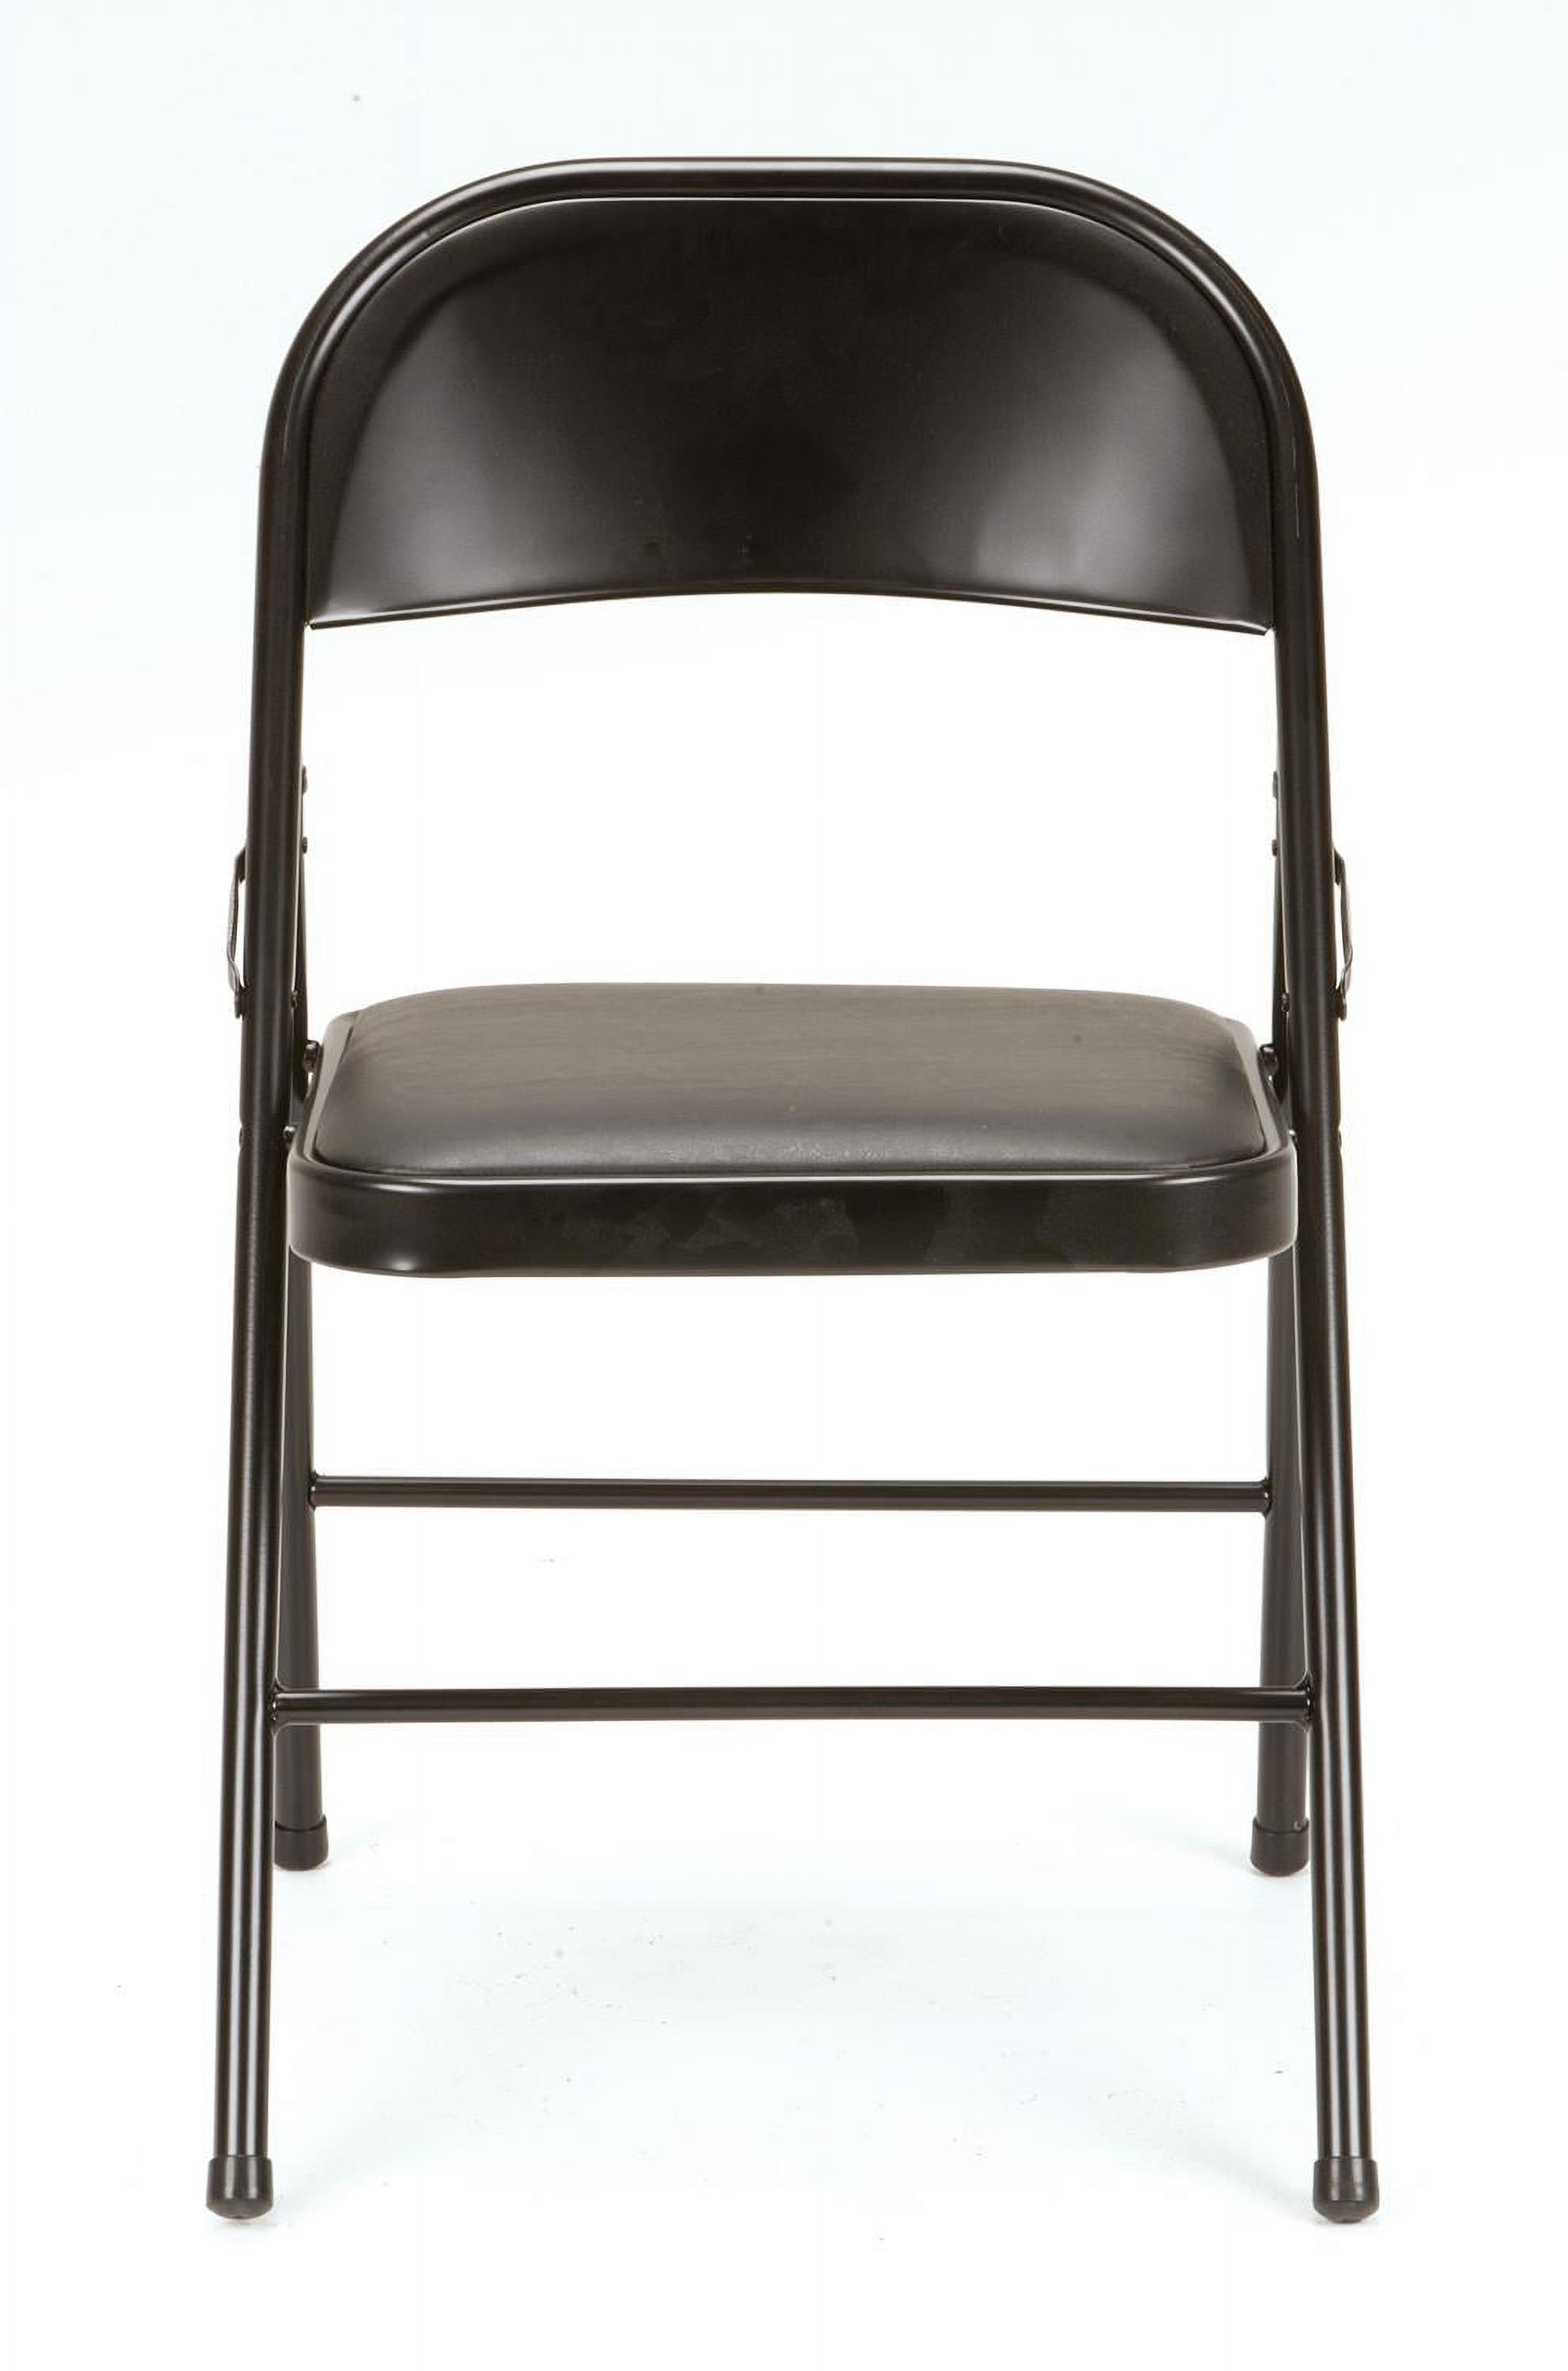 Mainstays Vinyl Folding Chair (4 Pack), Black - image 5 of 12